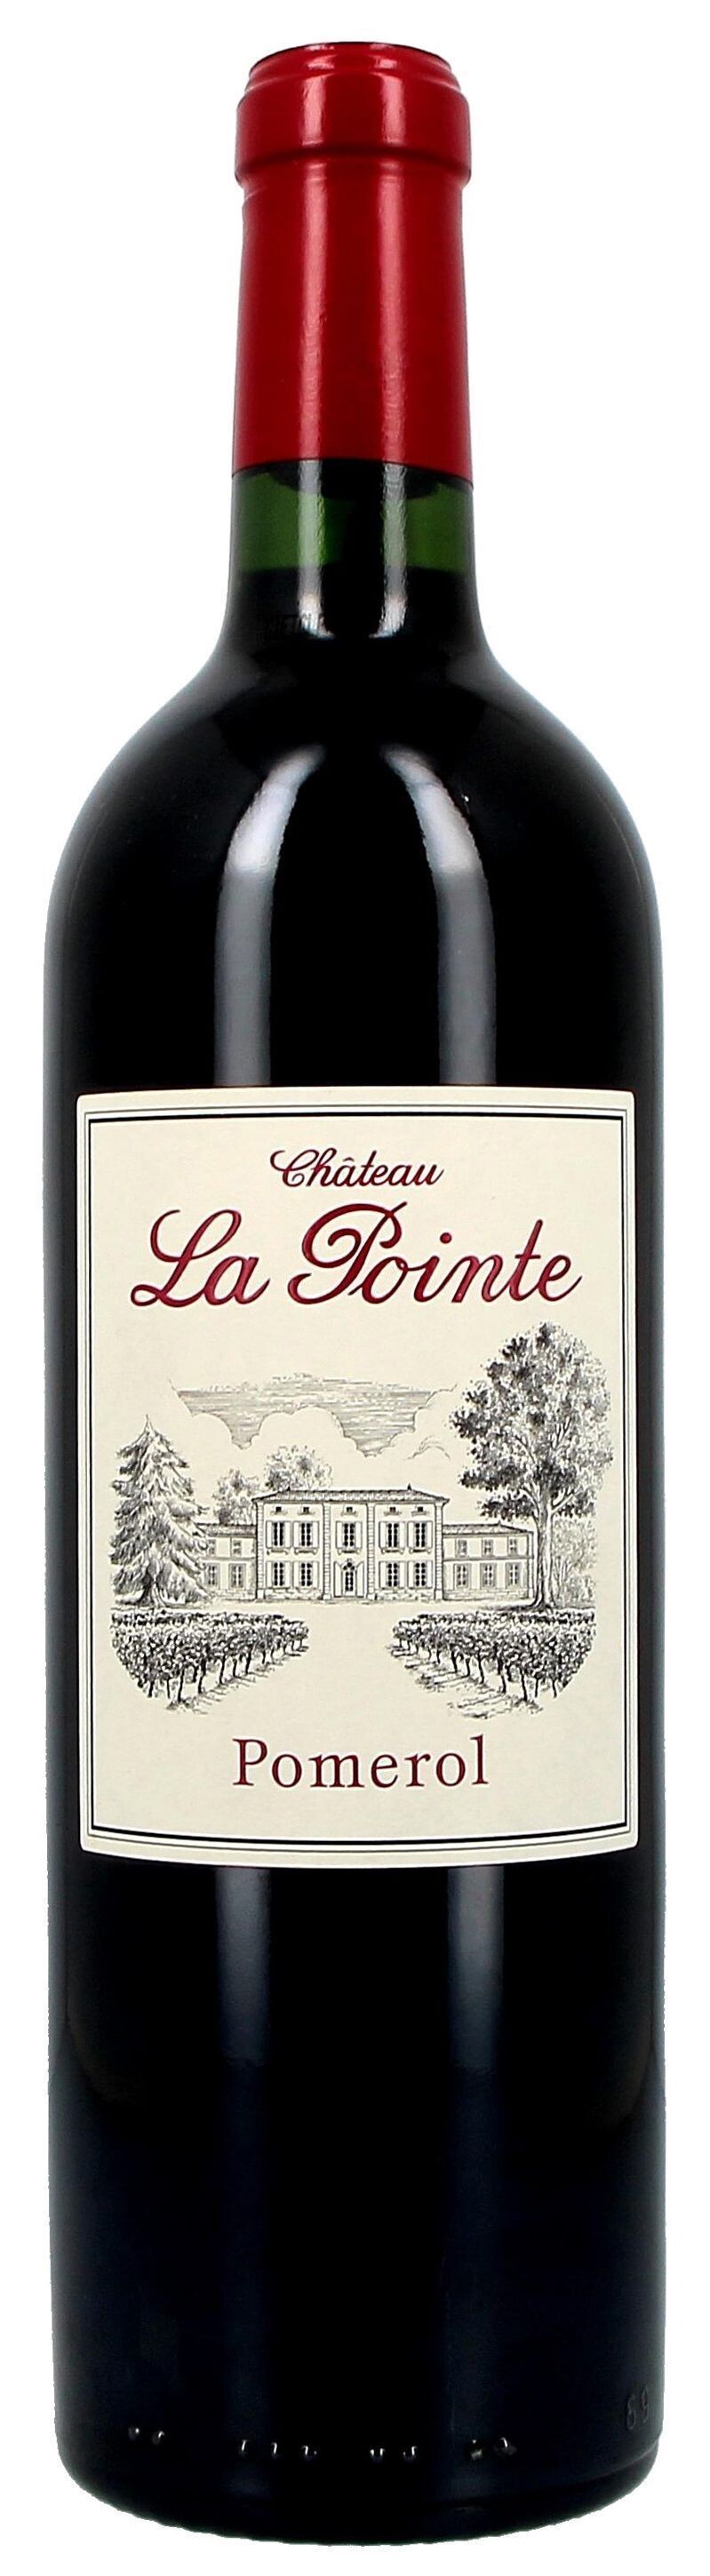 Chateau La Pointe 75cl 2019 Pomerol Wine